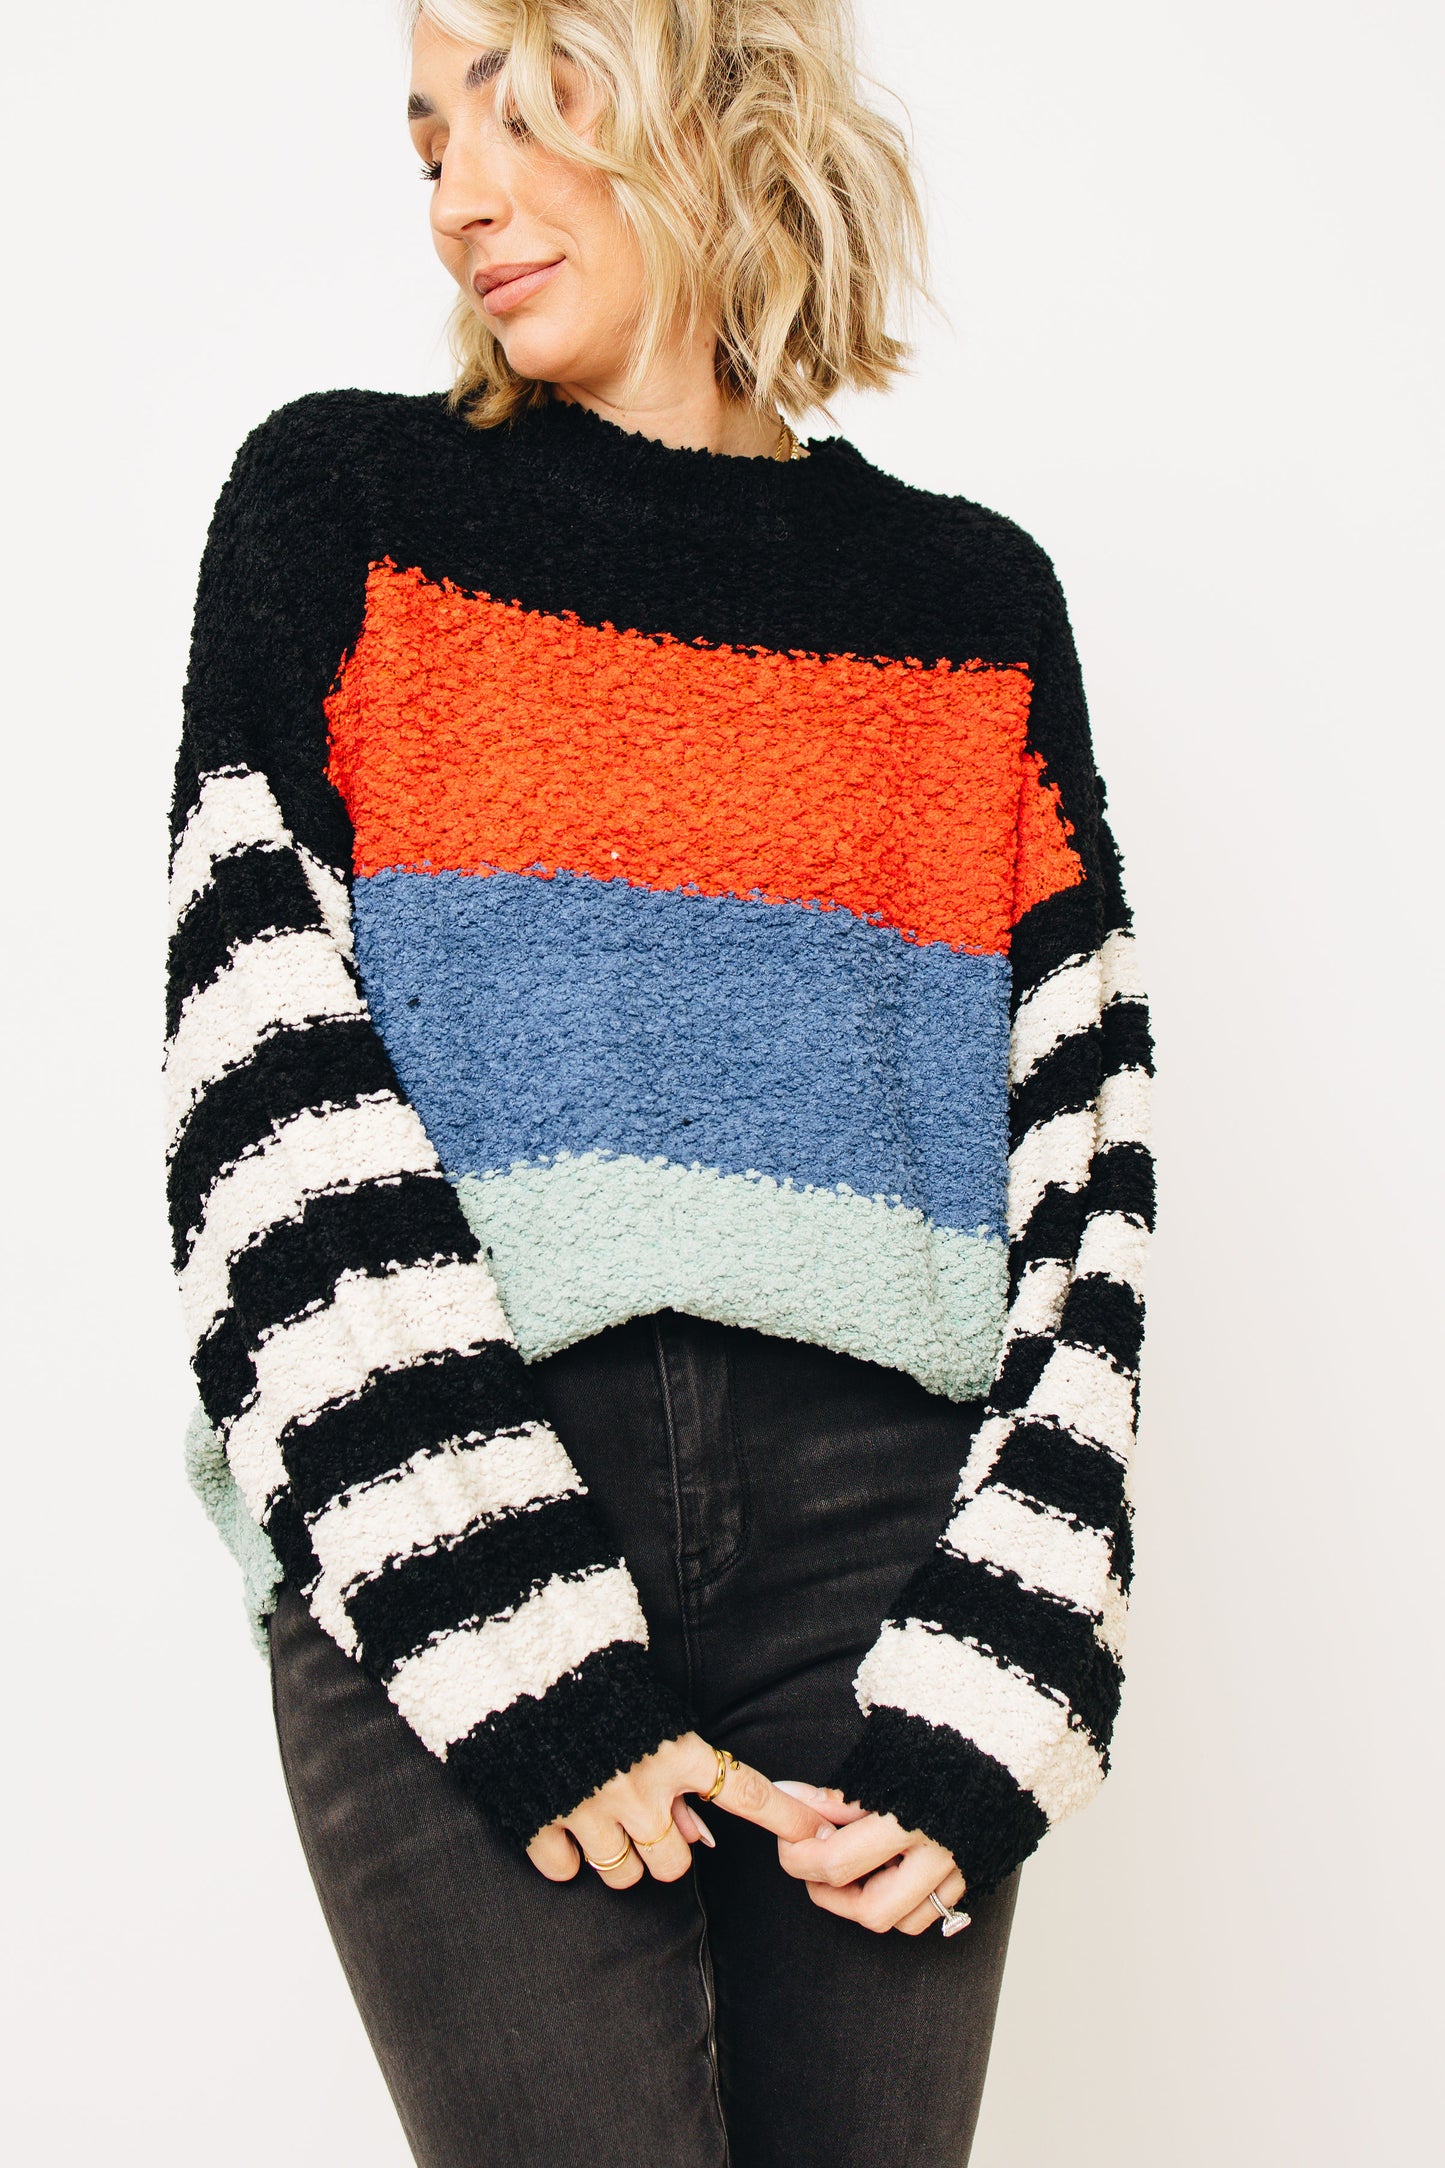 Striking Stripe Knit Sweater Top (S-L)